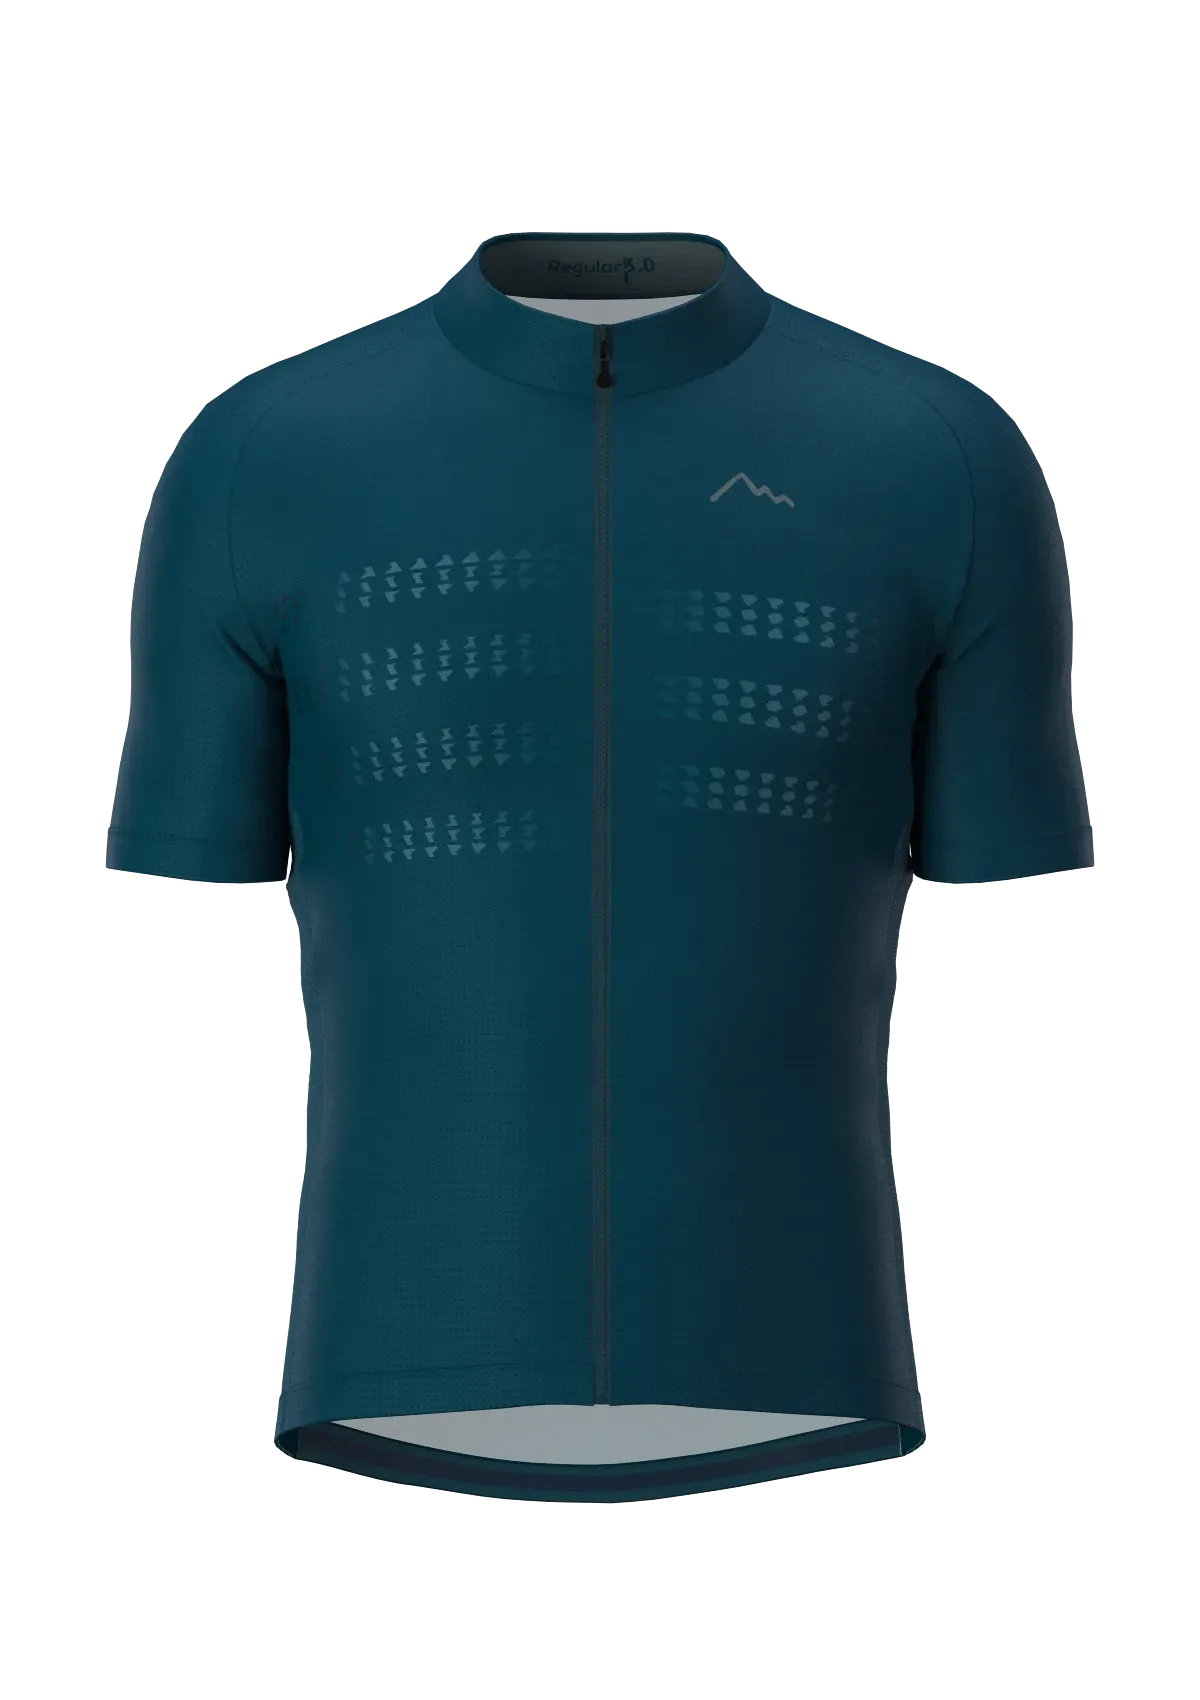 Regular navy blue cycling jersey